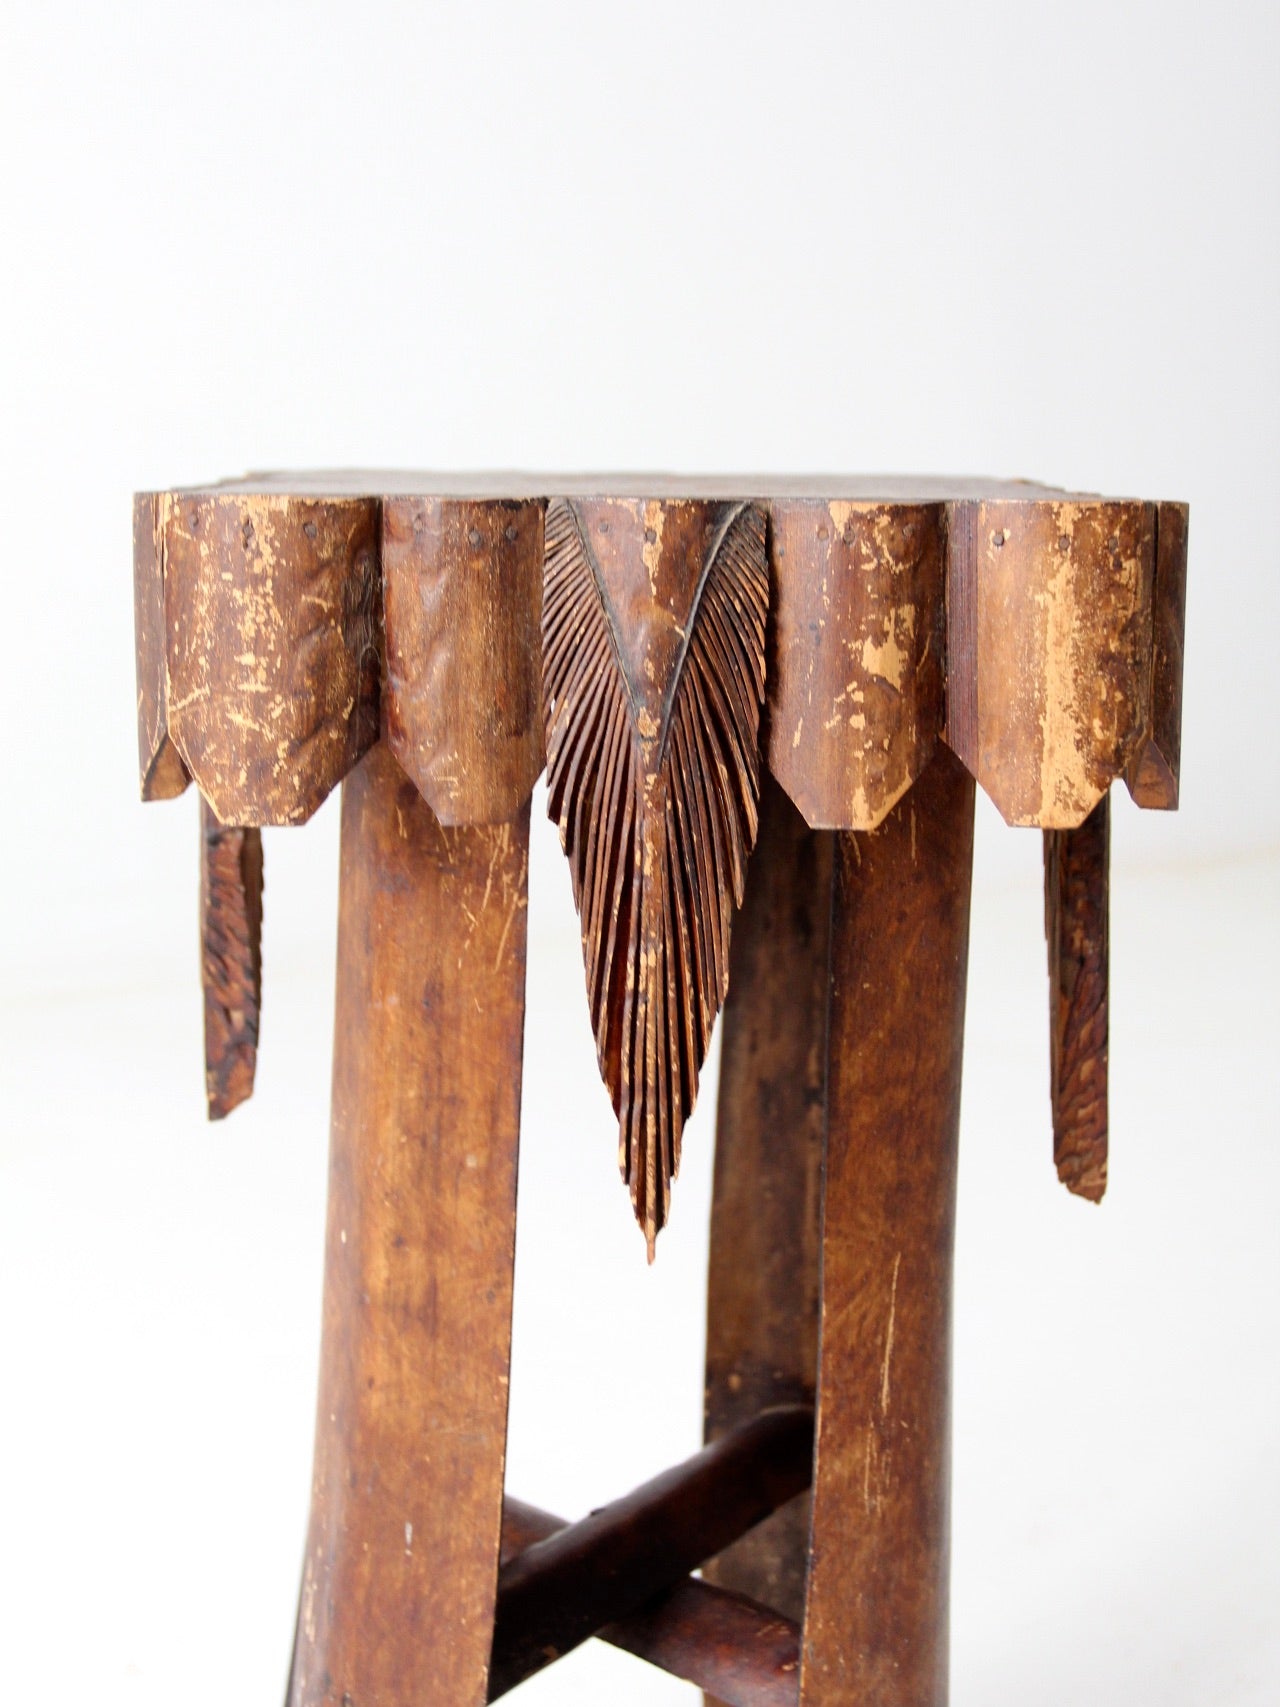 antique folk art palm frond table